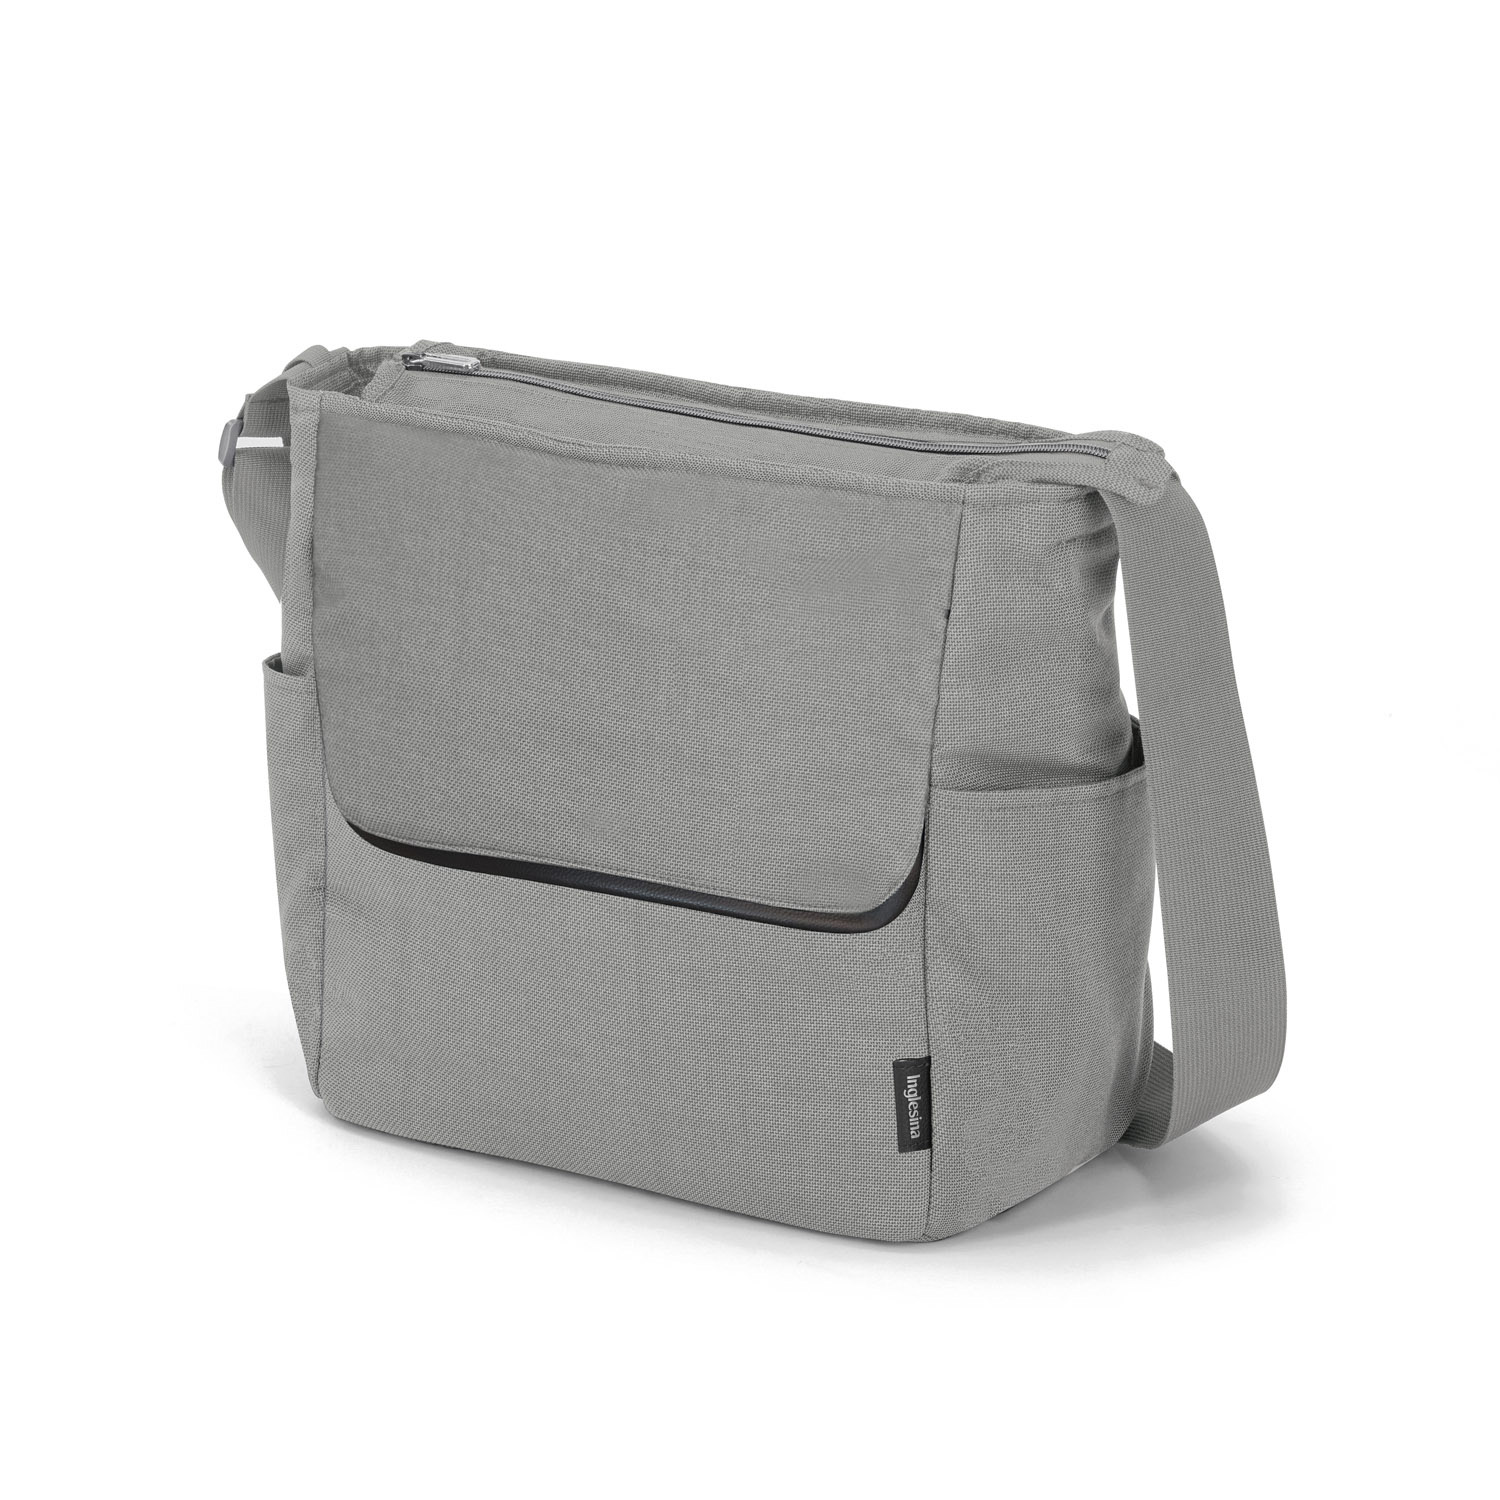 Inglesina borsa aptica day bag satin grey sulla pagina Inglesina - Borsa Aptica Day Bag